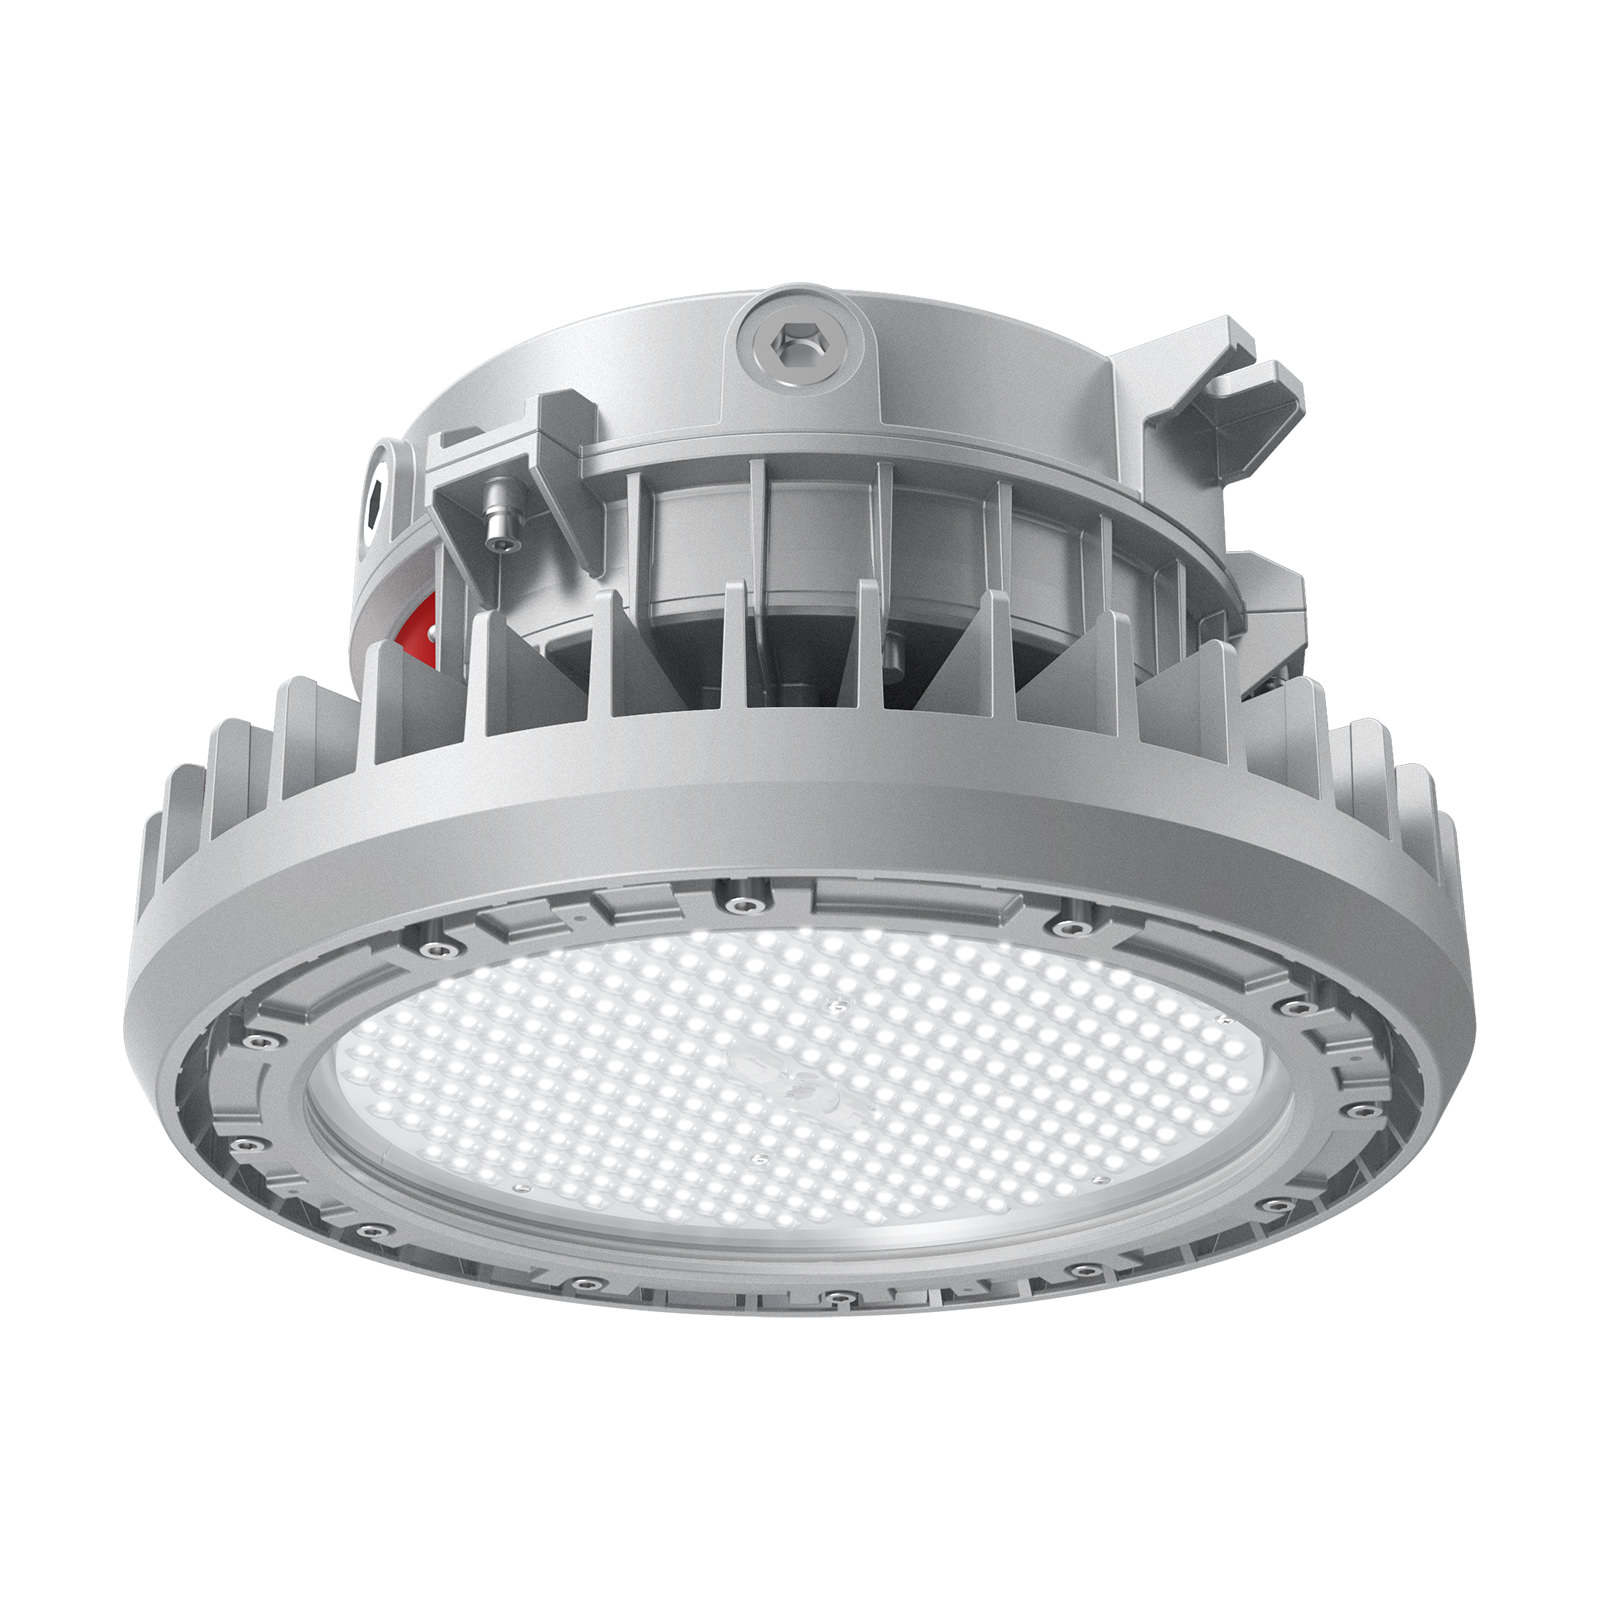 HA05 LED Luminaires for Hazardous Locations